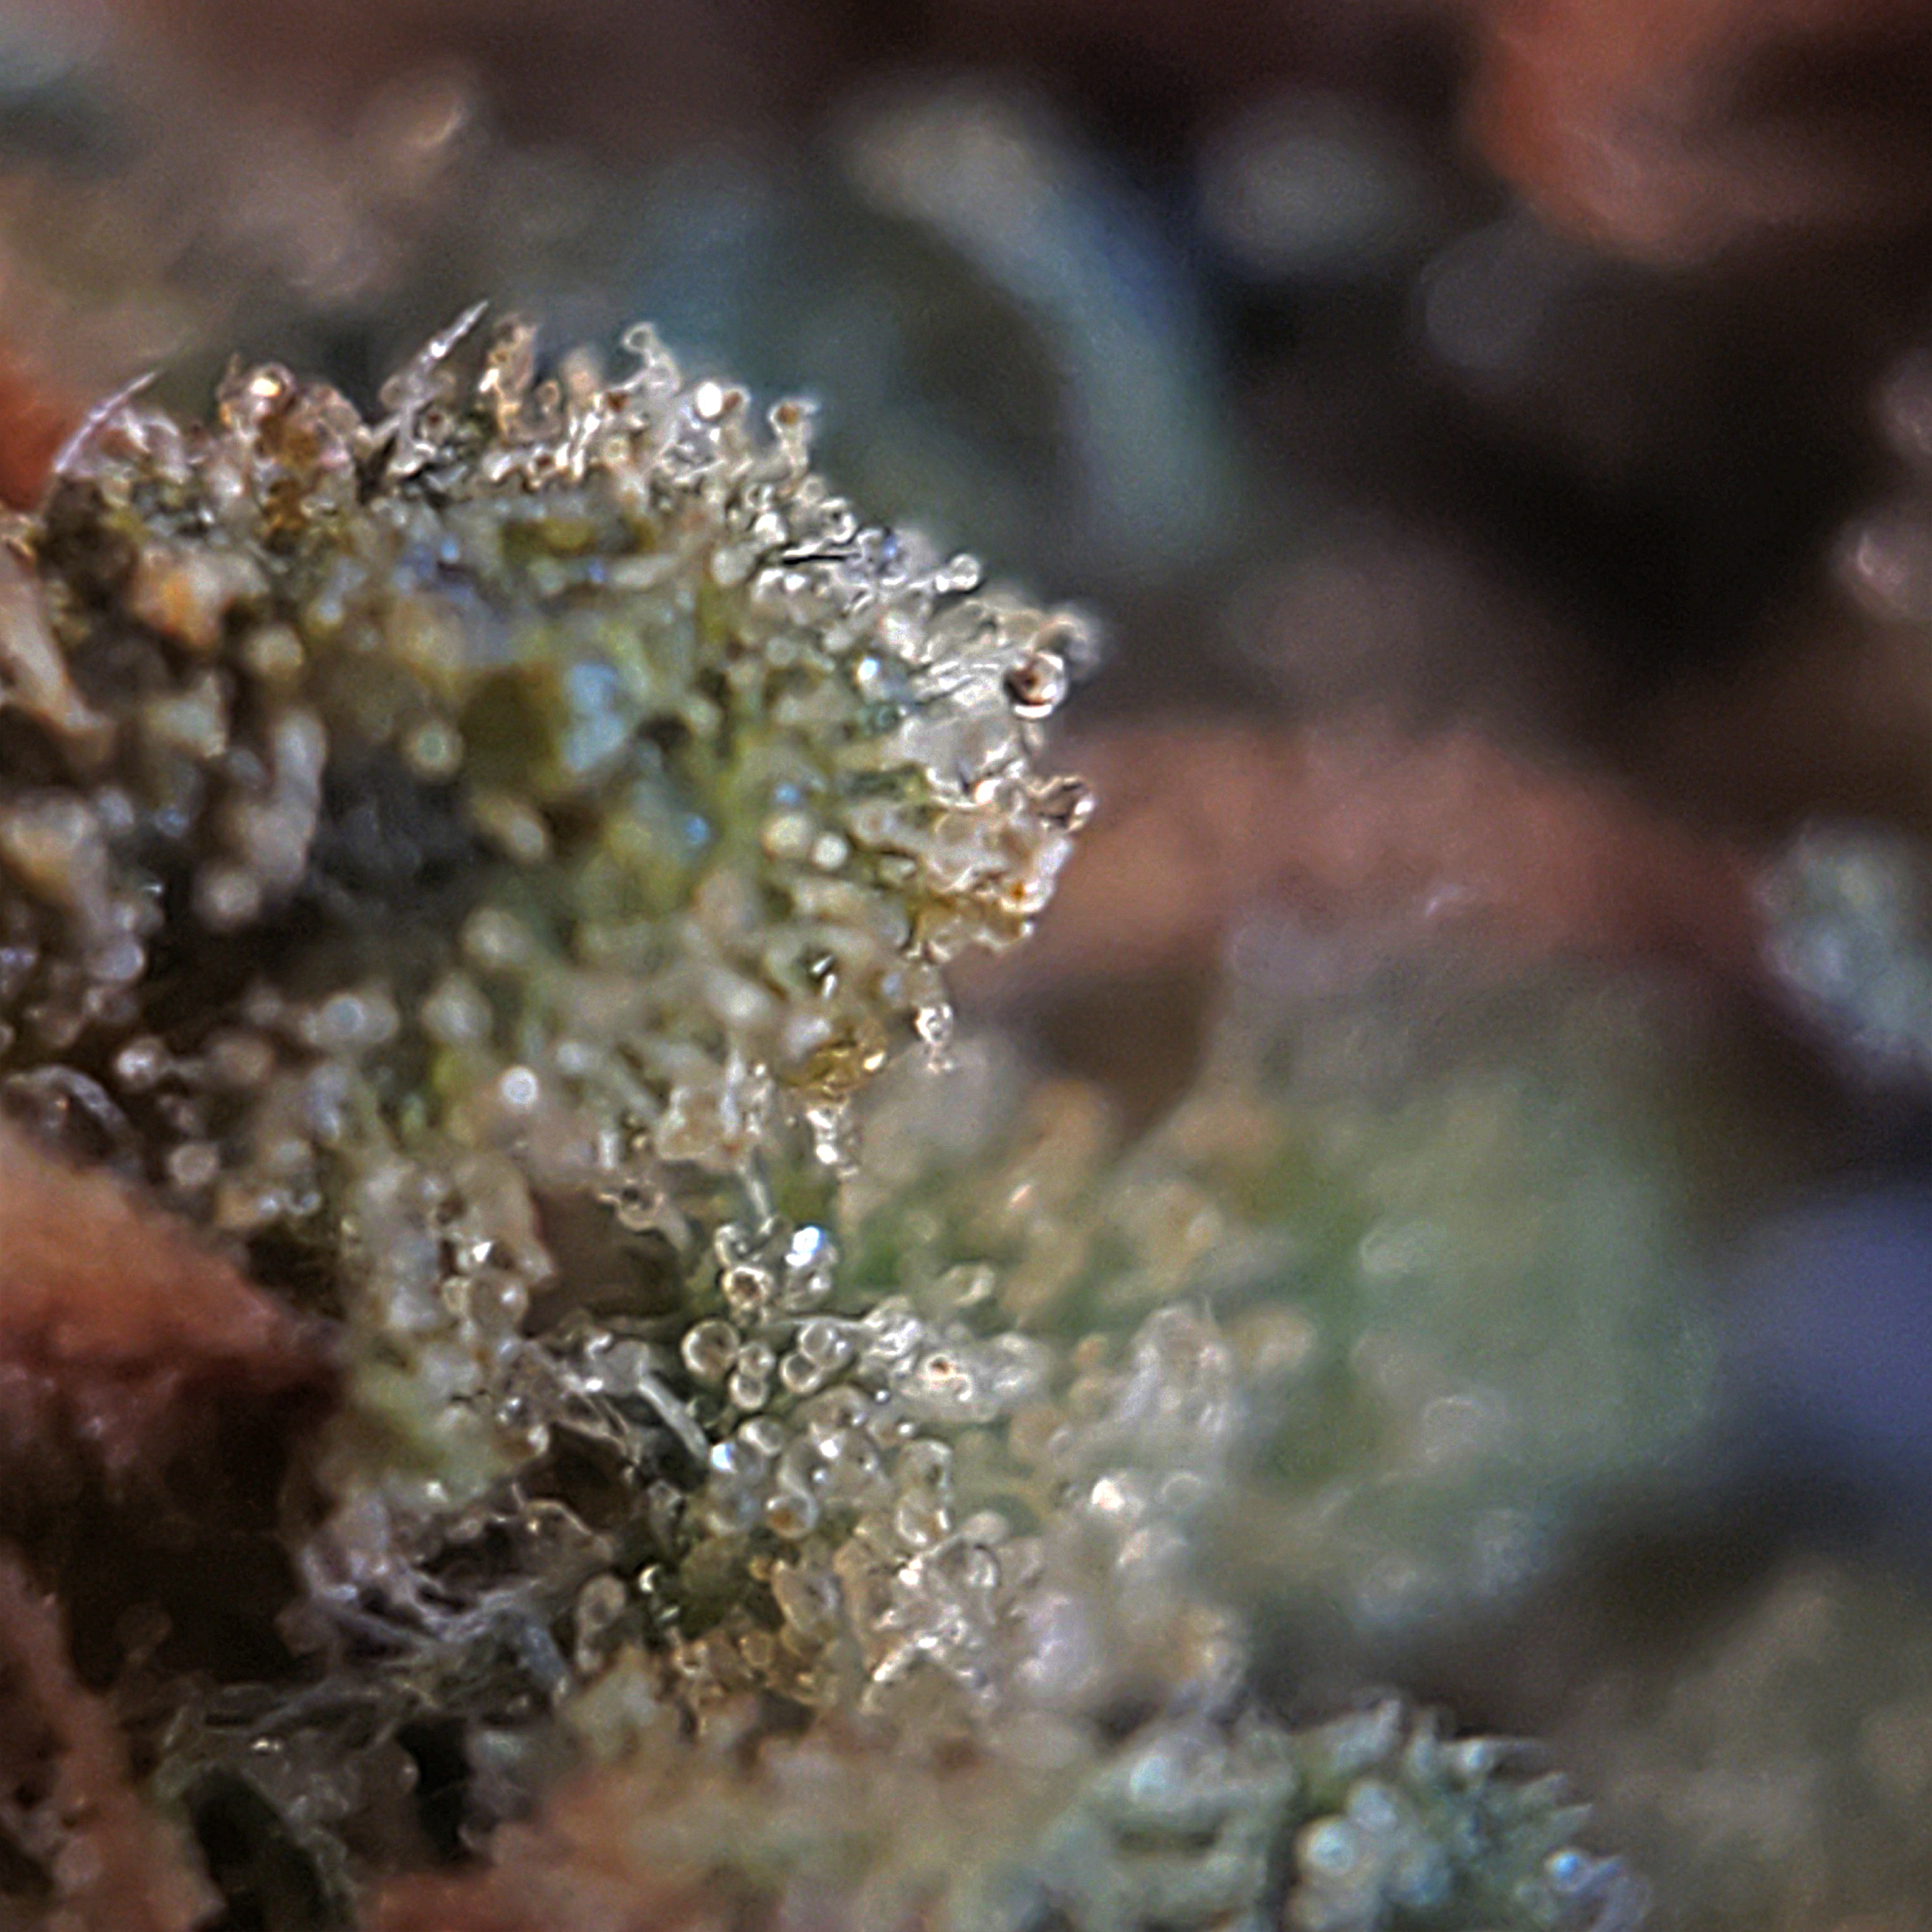 Reef Organic Canadian Cannabis Nova Scotia High Seas Ghost Train Haze Sativa Weed Strain - Stashmagazine.ca - Volume 1